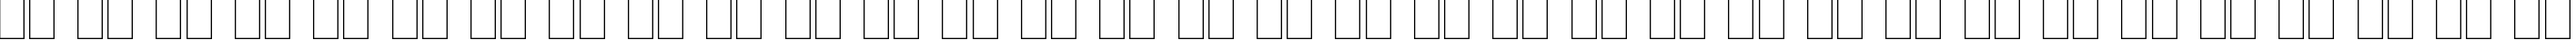 Пример написания русского алфавита шрифтом Arabia Plain:001.003